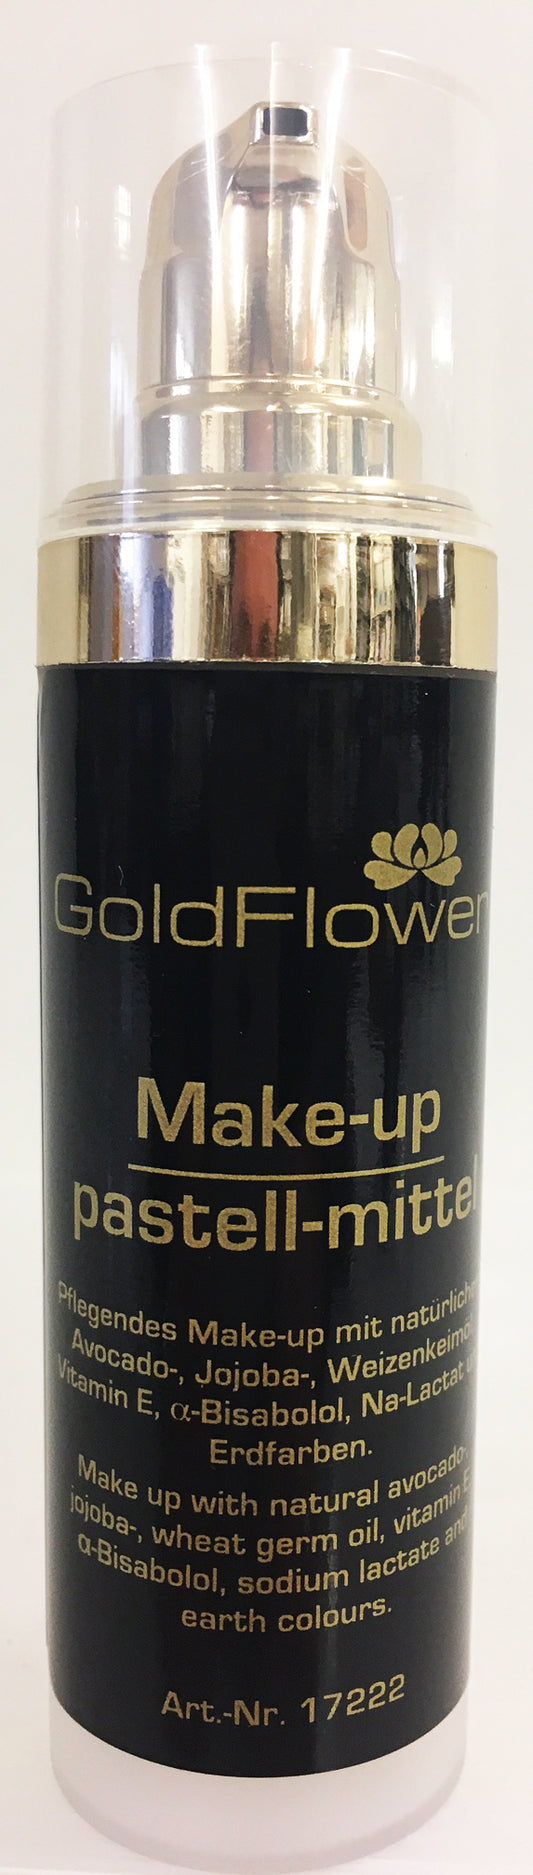 Goldflower Make-up Fluid pastell-mittel 30 ml